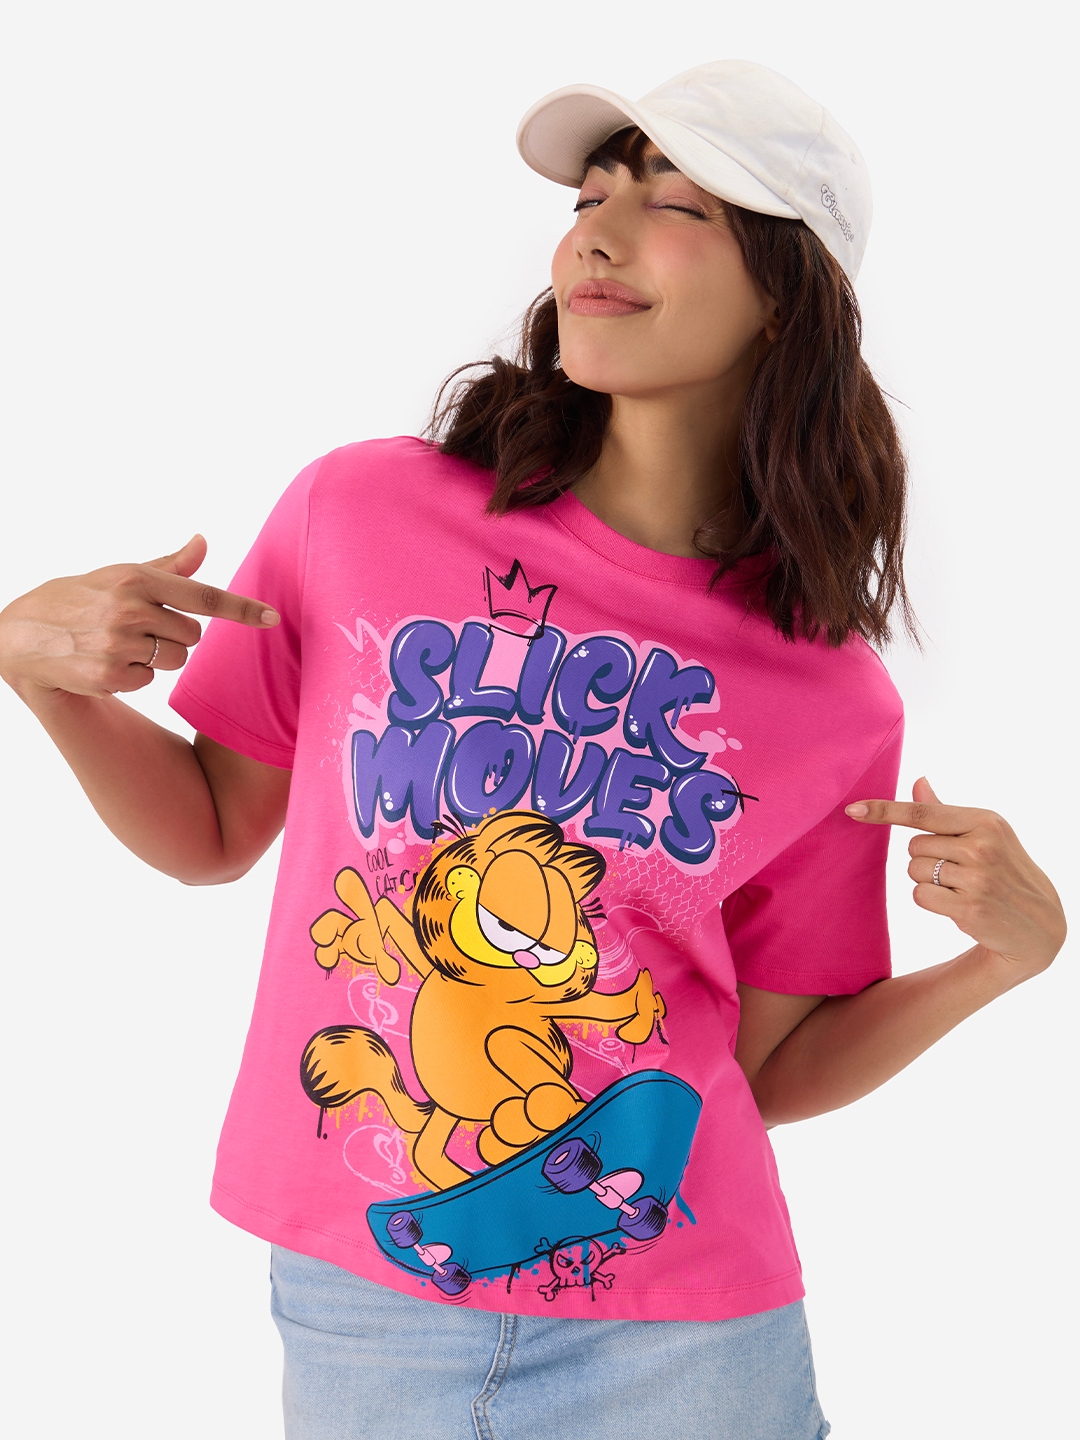 Women's Garfield: Slick Moves Women's Relaxed Fit T-Shirt